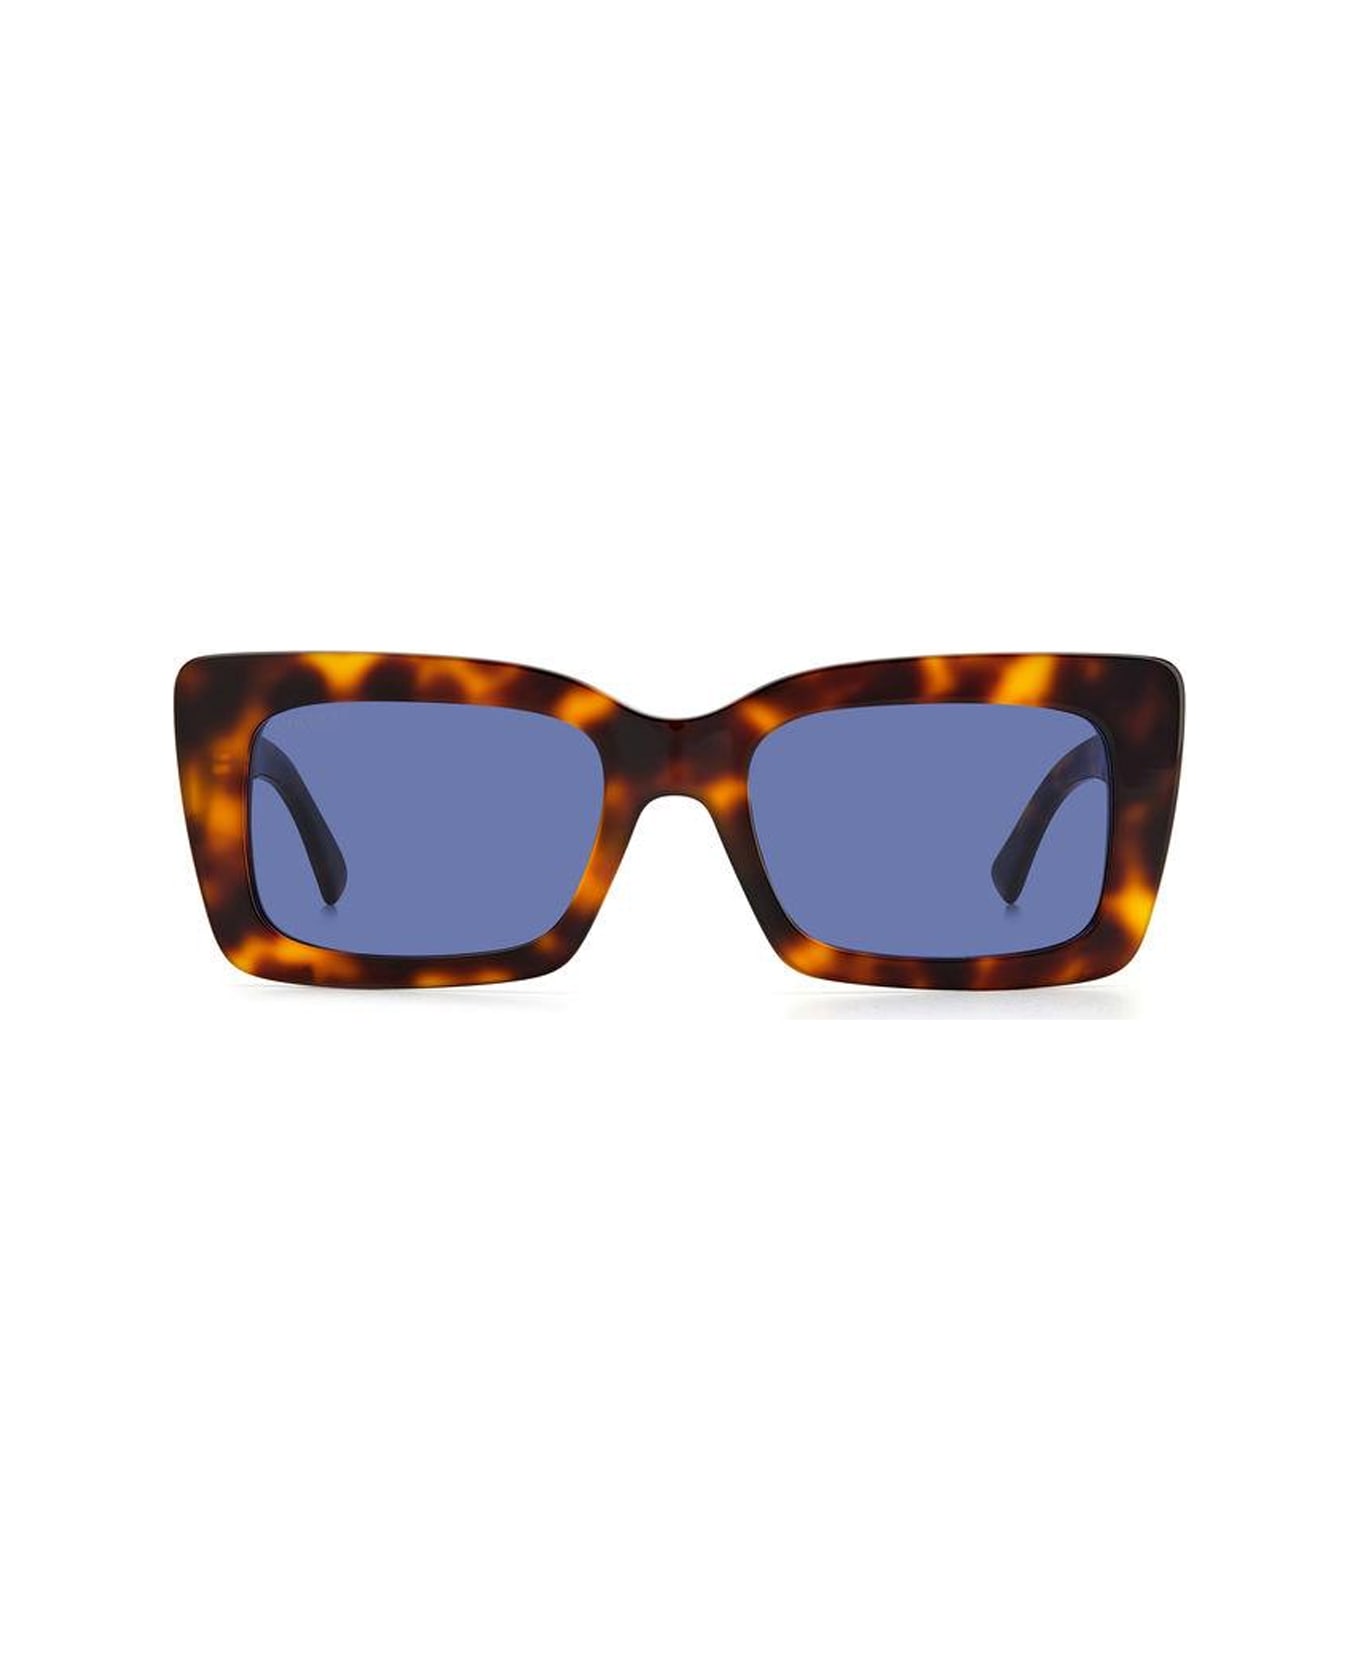 Jimmy Choo Eyewear Vita/s Sunglasses rossa - Marrone